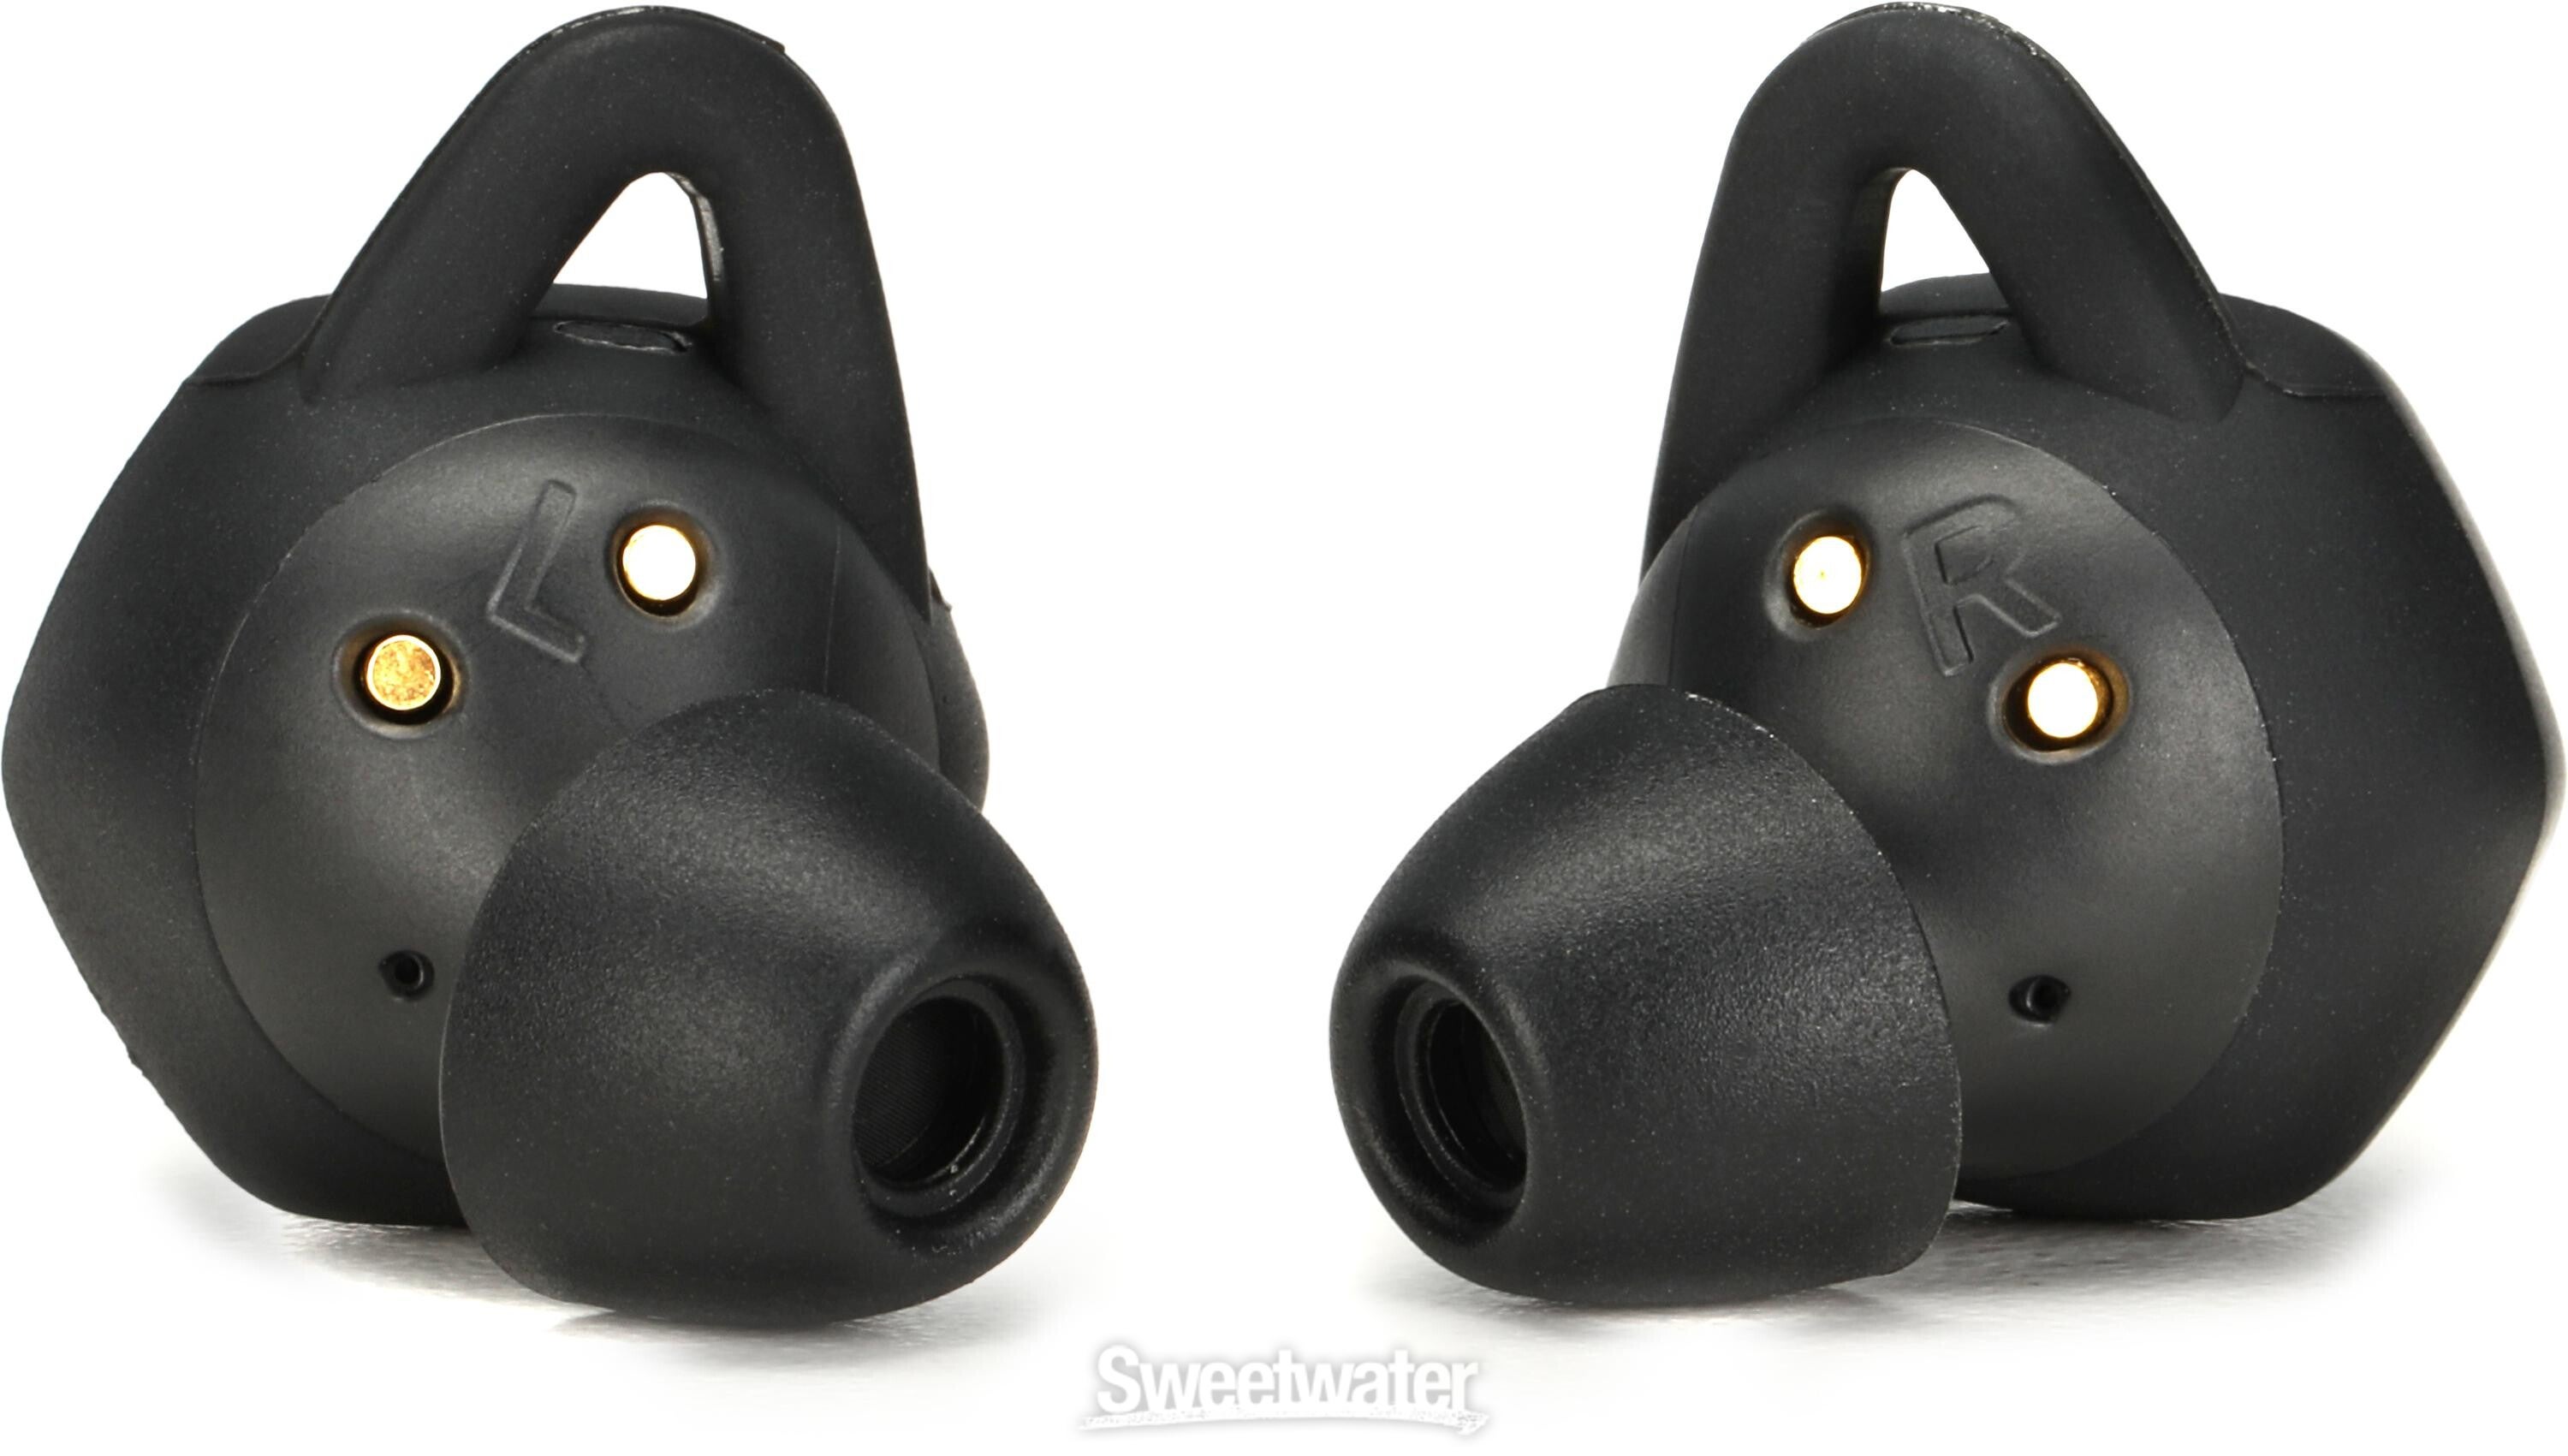 V-Moda Hexamove Pro Wireless Earbuds - Black | Sweetwater